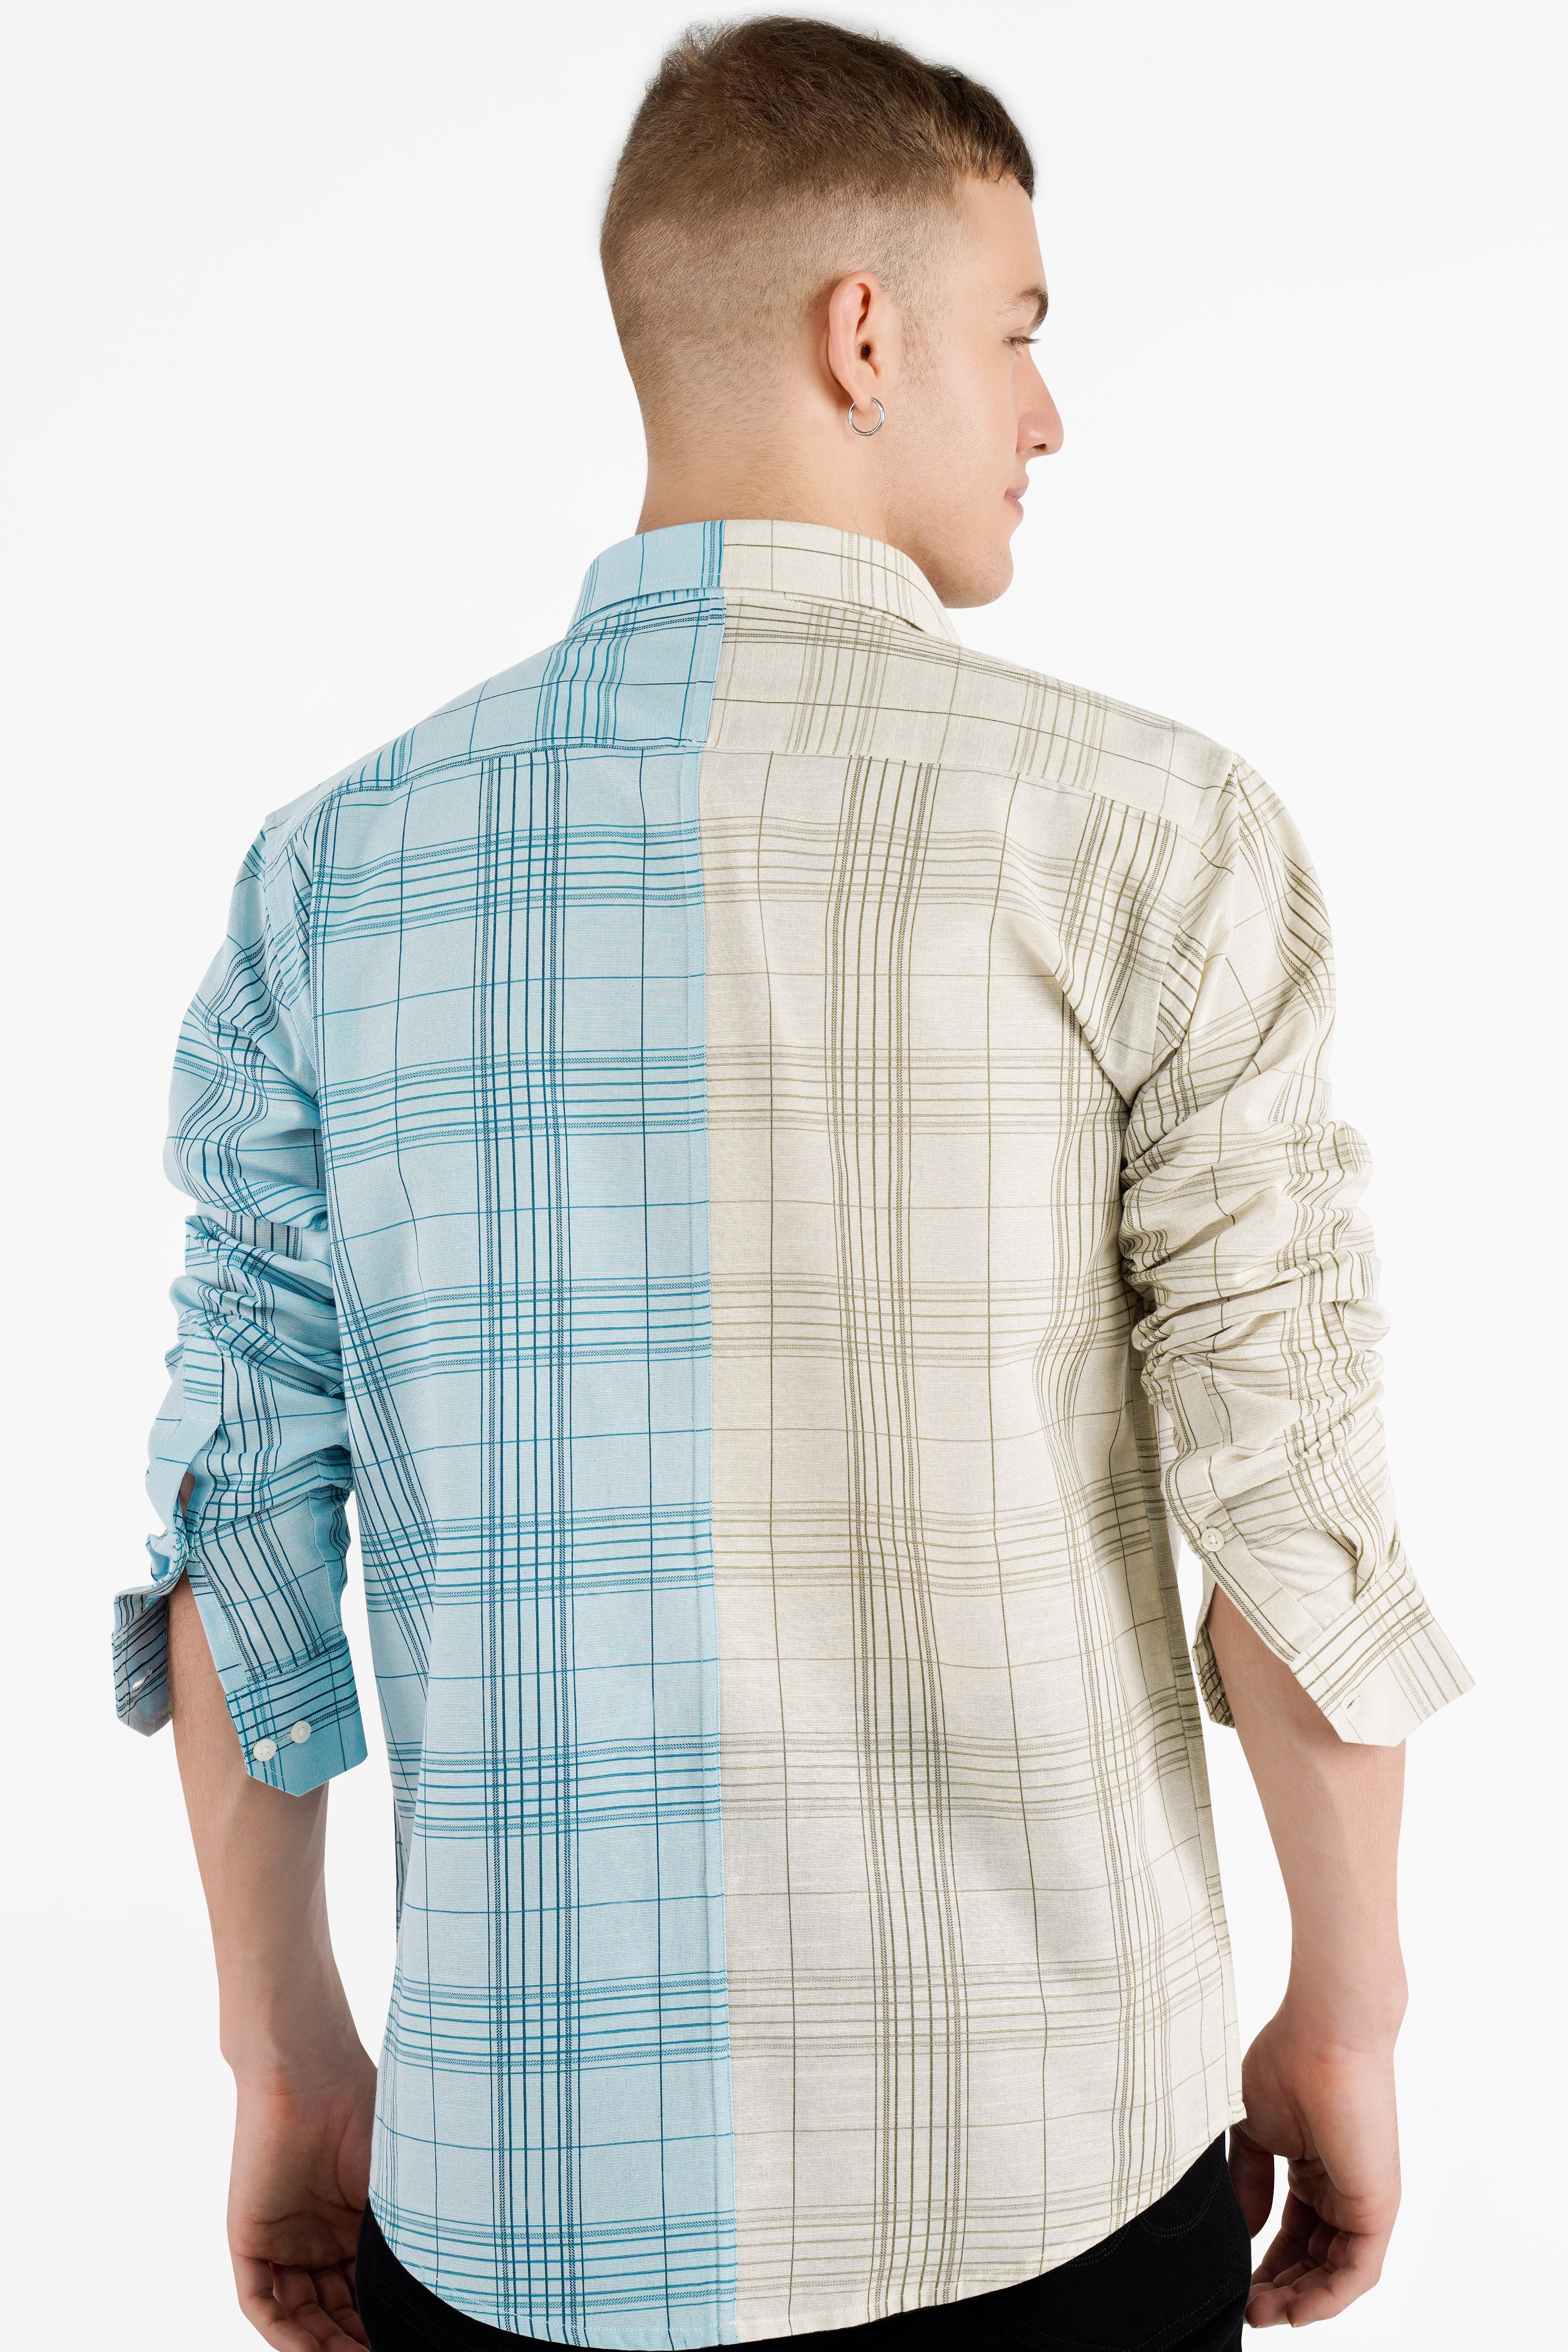 Half Blizzard Blue and Half Pavlova Brown Checkered with Patchwork Luxurious Linen Designer Shirt